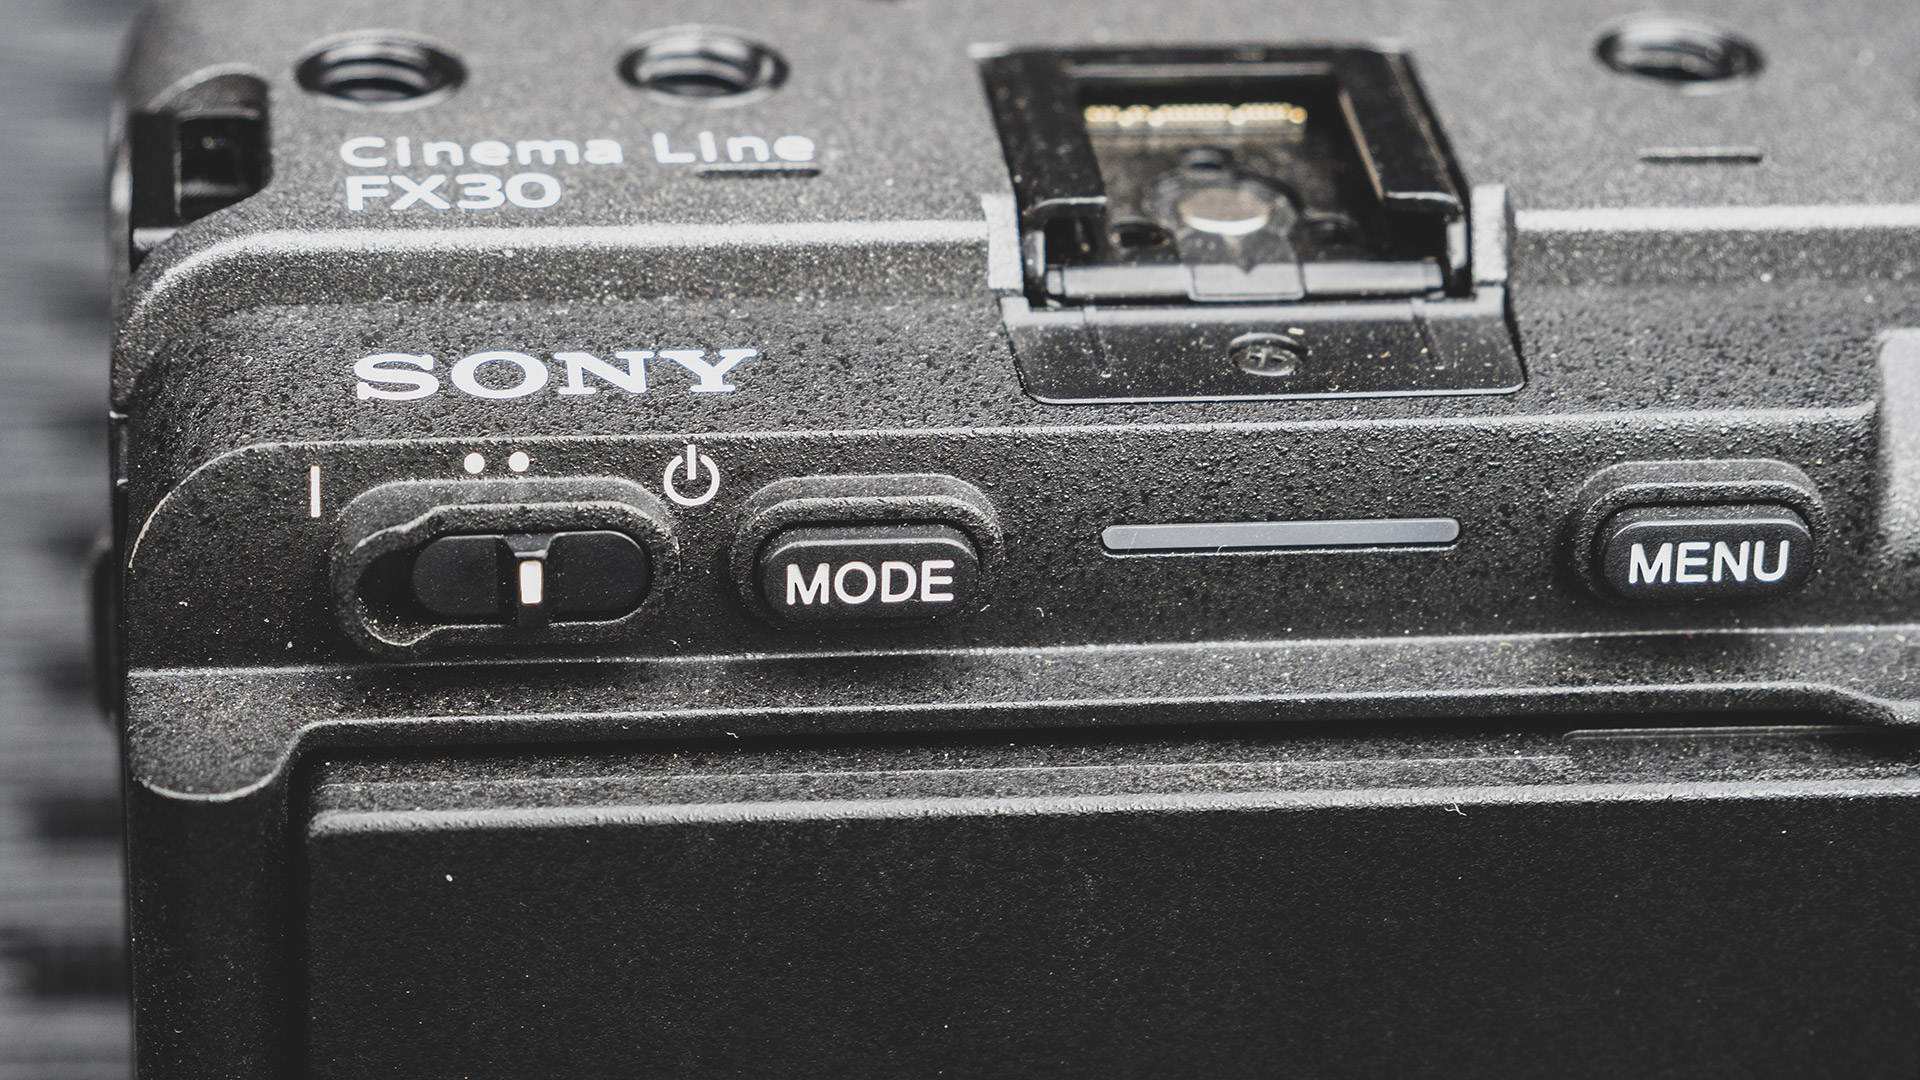 Sony FX30 Cinema Line camera buttons on rear